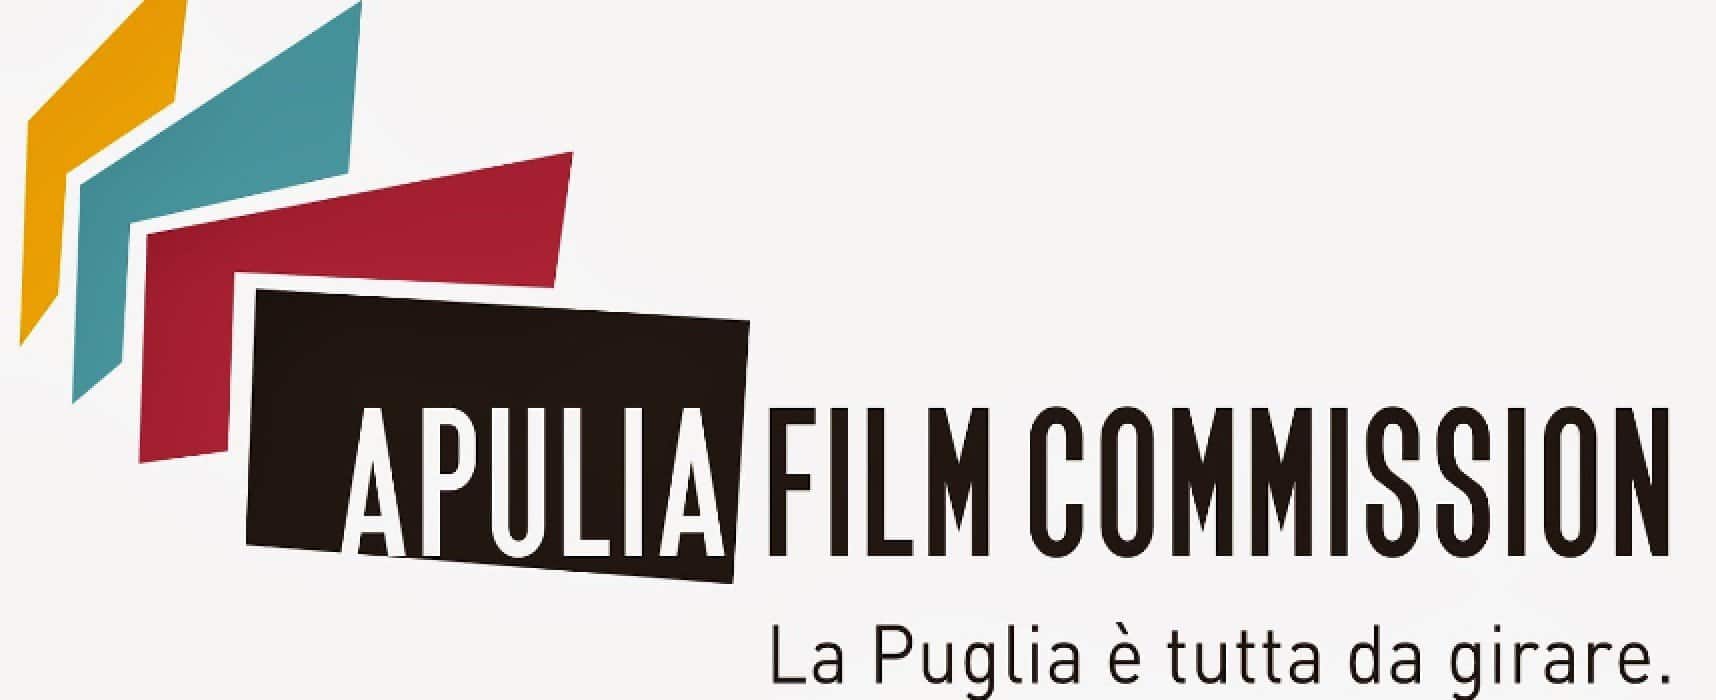 Apulia film commission 